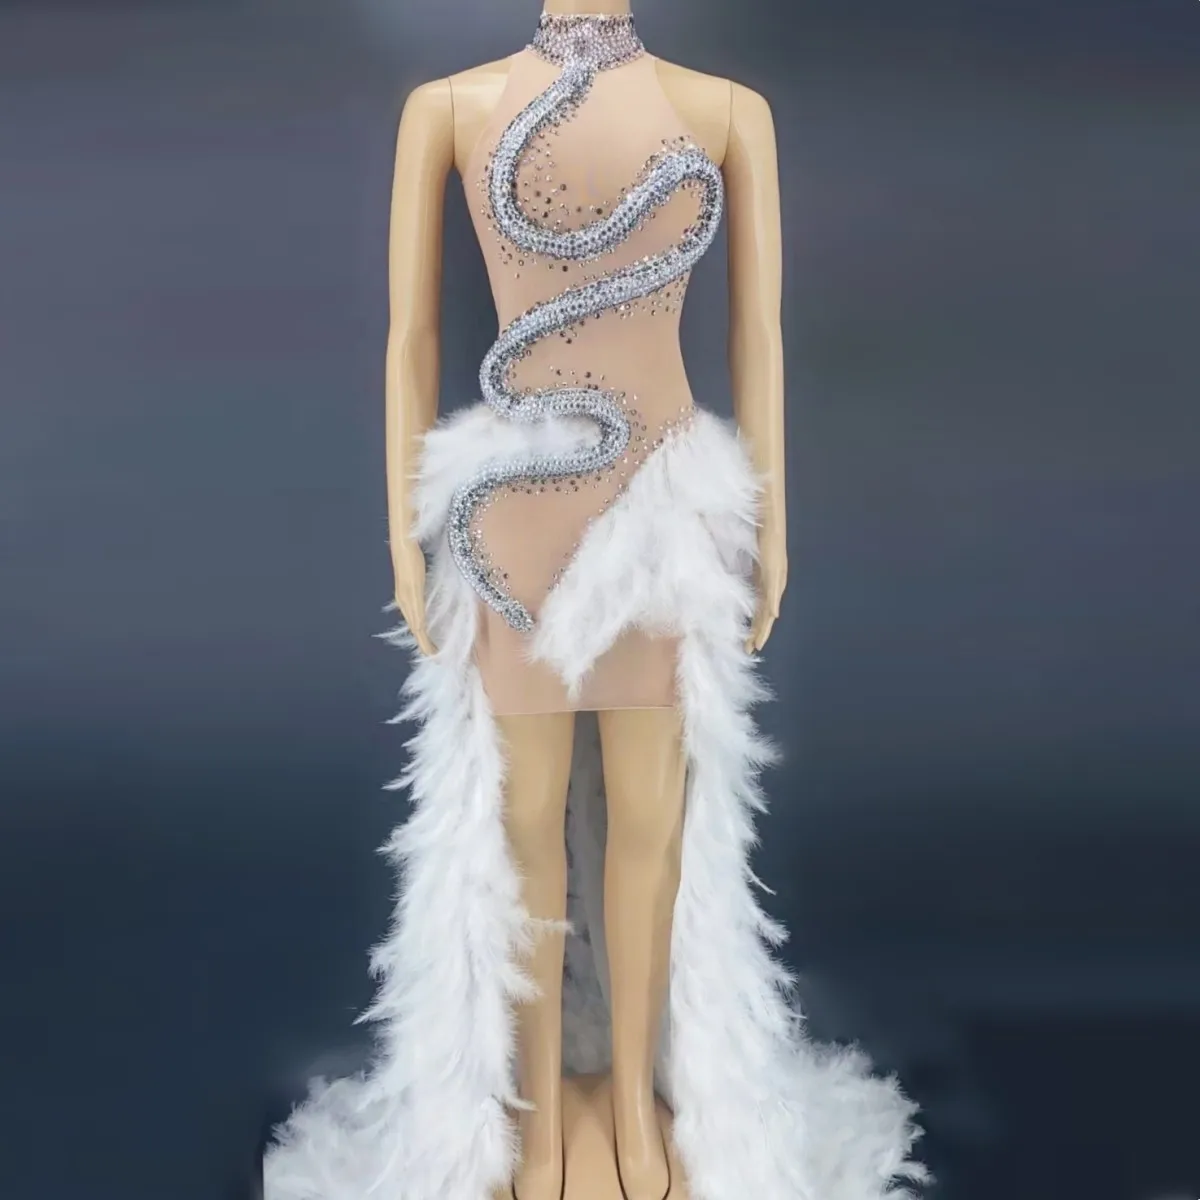 2021 New Fashion Sexy Sleeveless Feathers Tail Long Dress Women's Celebrate Party Fashion Dress Performance Costume Stage Wear